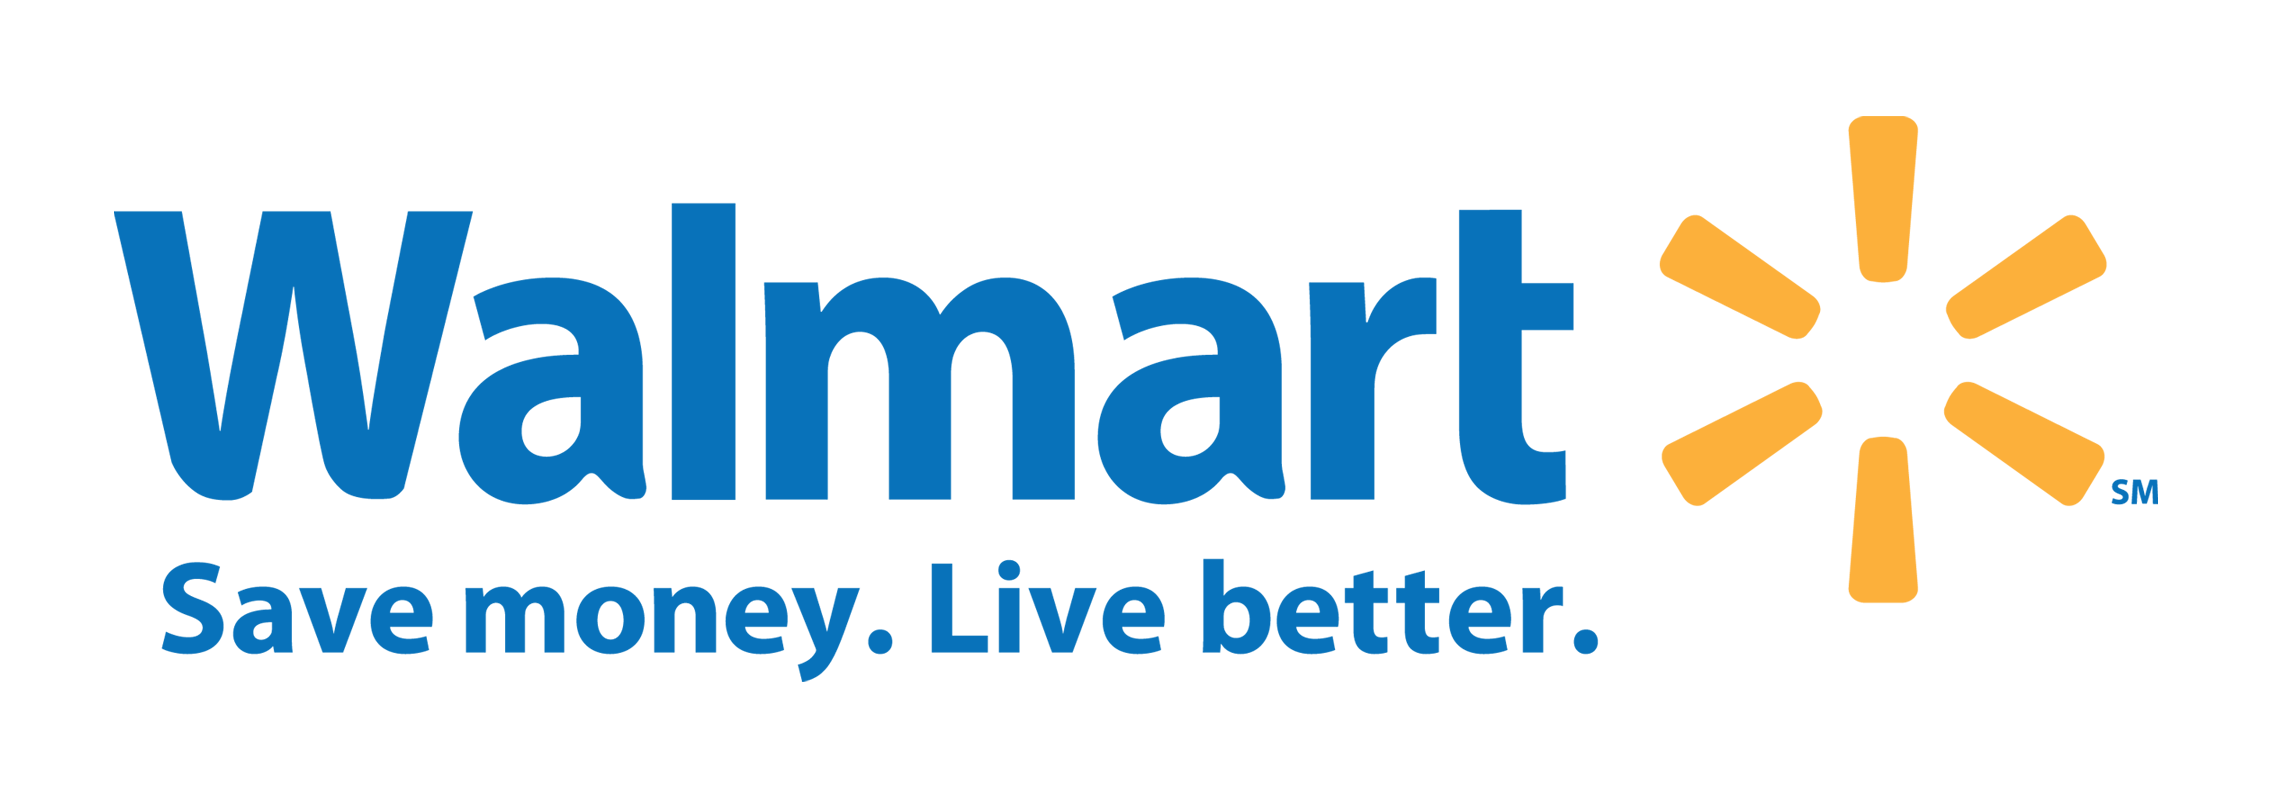 Download Walmart Logo PNG Image for Free